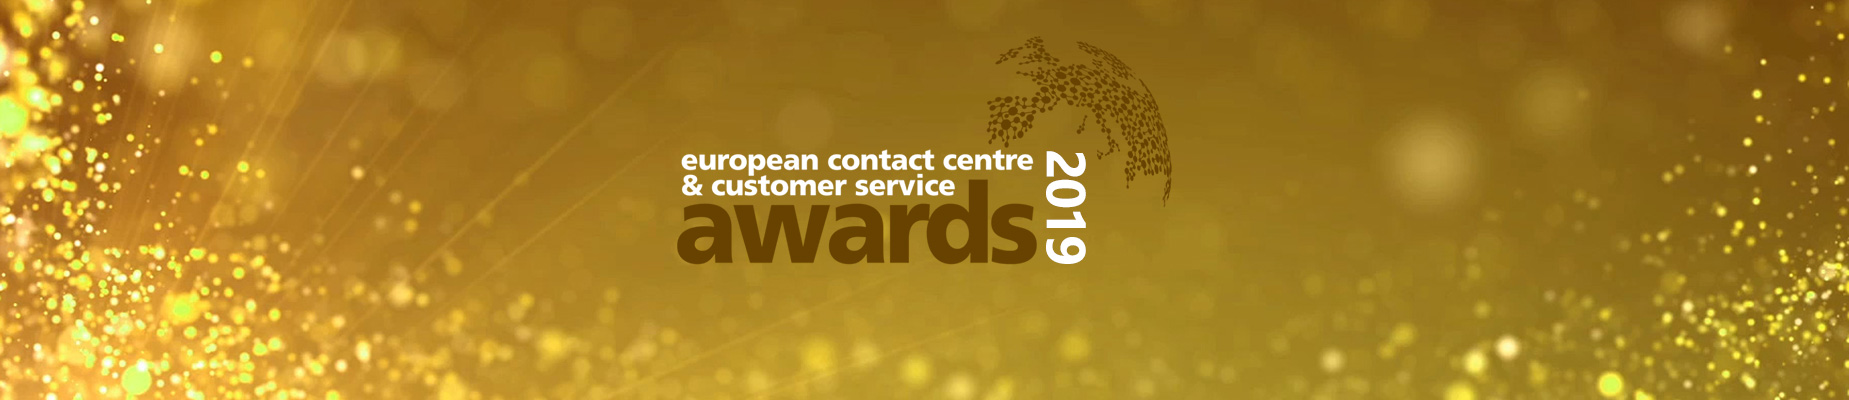 EU Contact Centre & Customer Service Awards